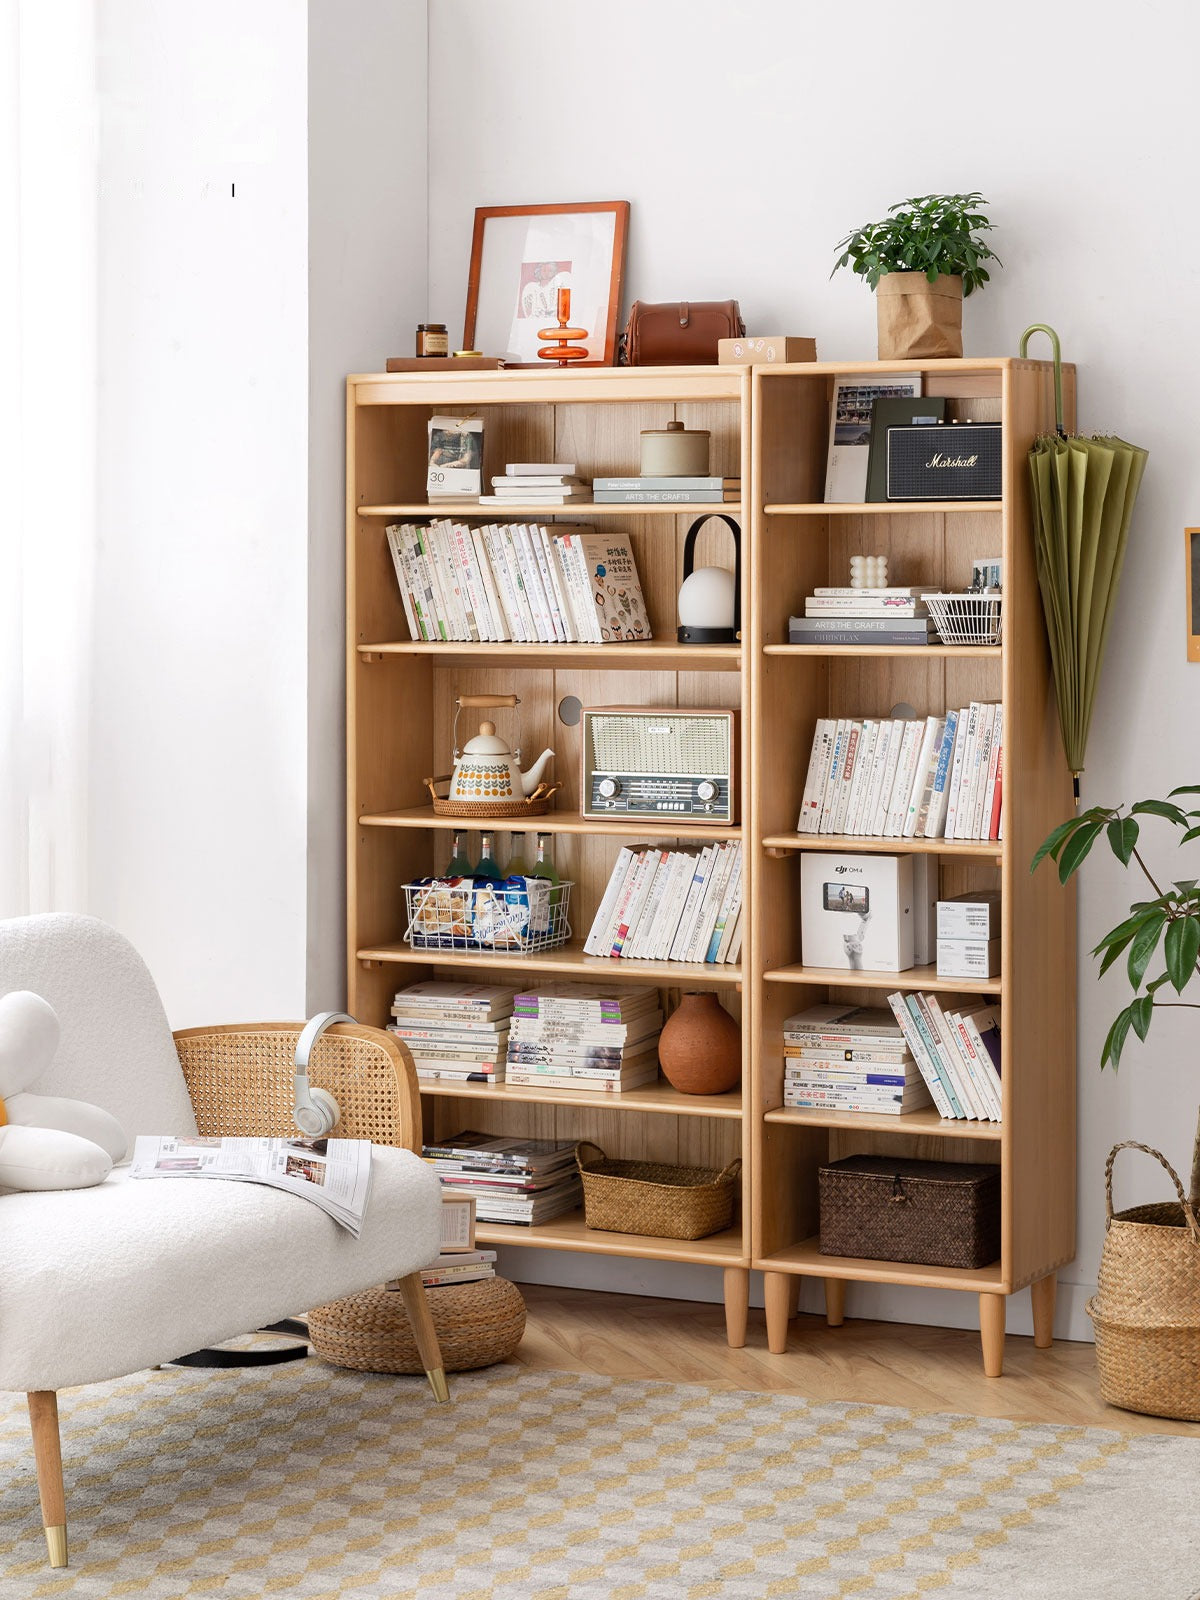 Beech Solid Wood Bookshelves Storage Shelf -